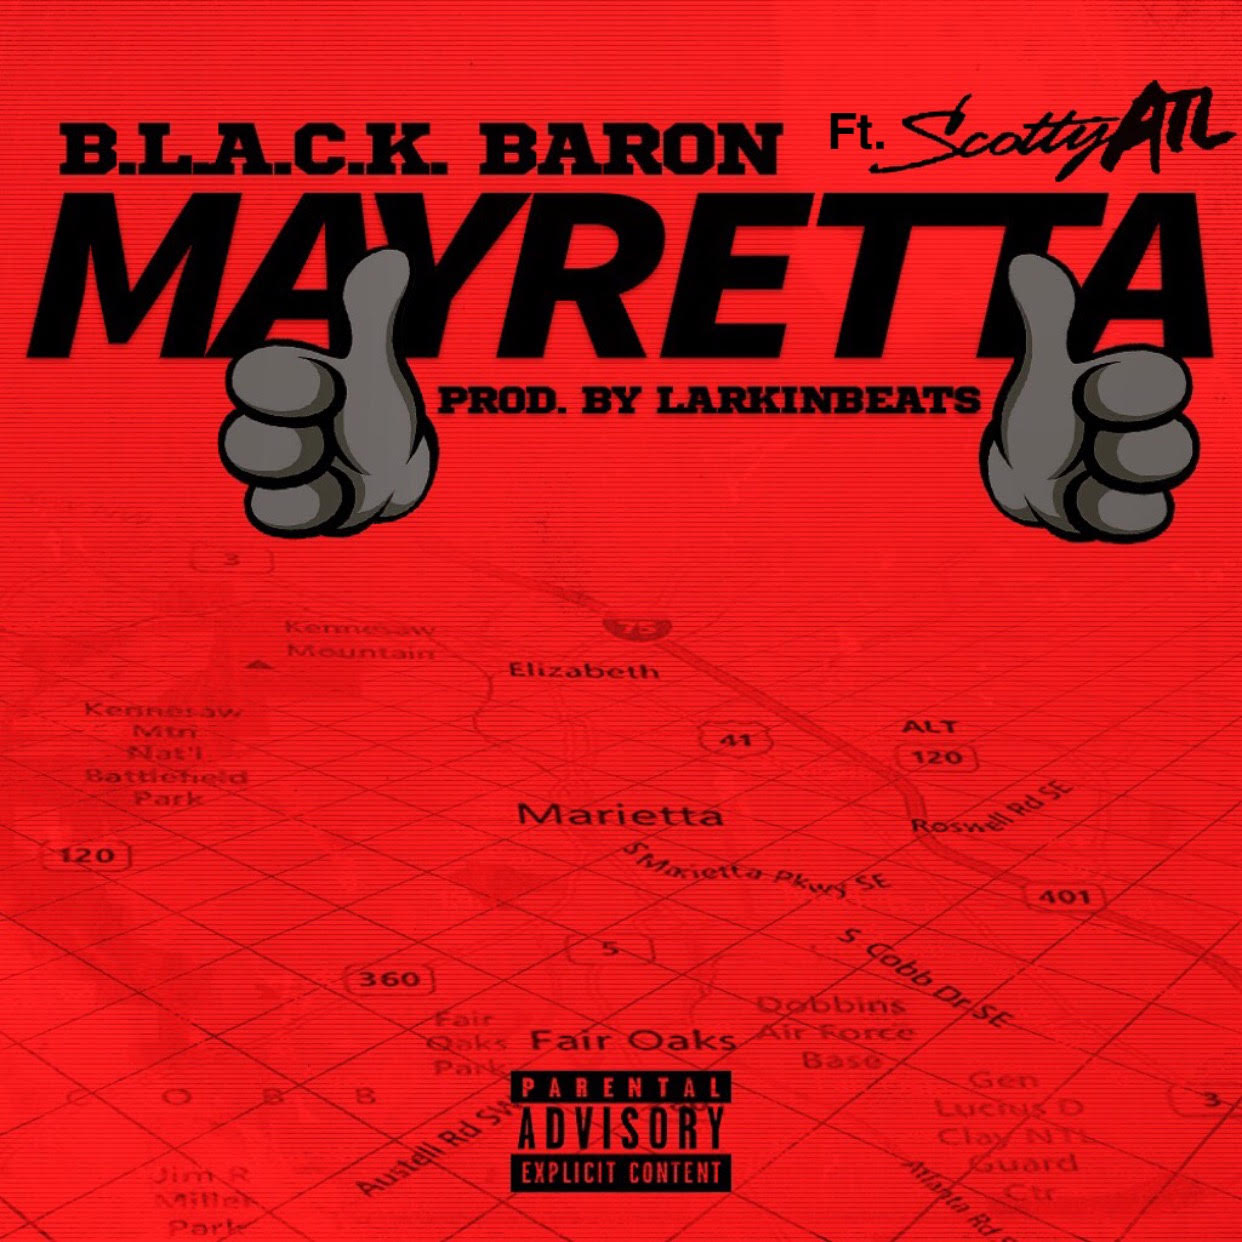 B.L.A.C.K Baron’s latest single Mayretta featuring well-known ATL artist, Scotty ATL.